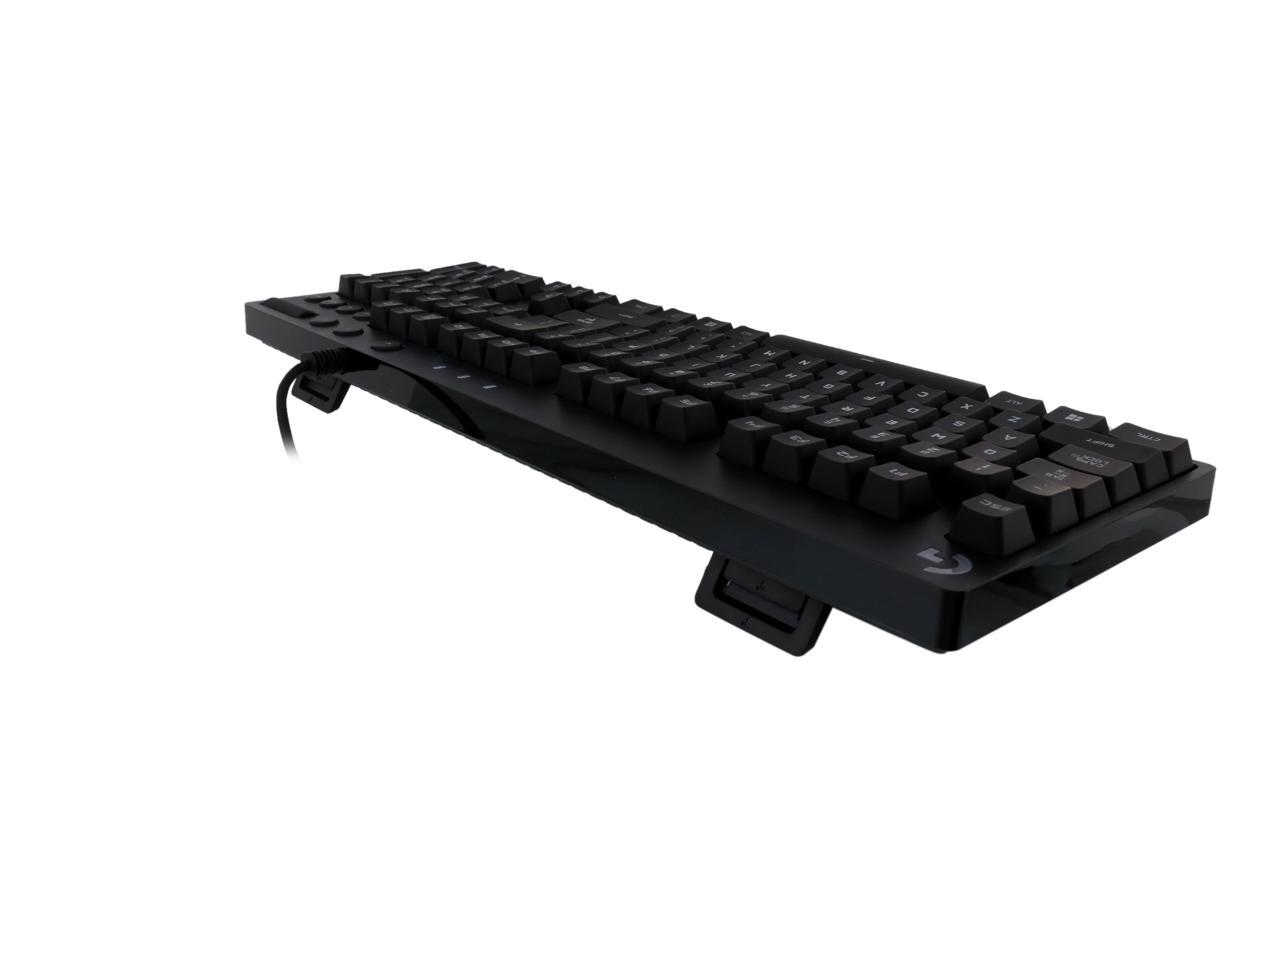 920-007739 Logitech G810 Orion Spectrum RGB Mechanical Gaming Keyboard 